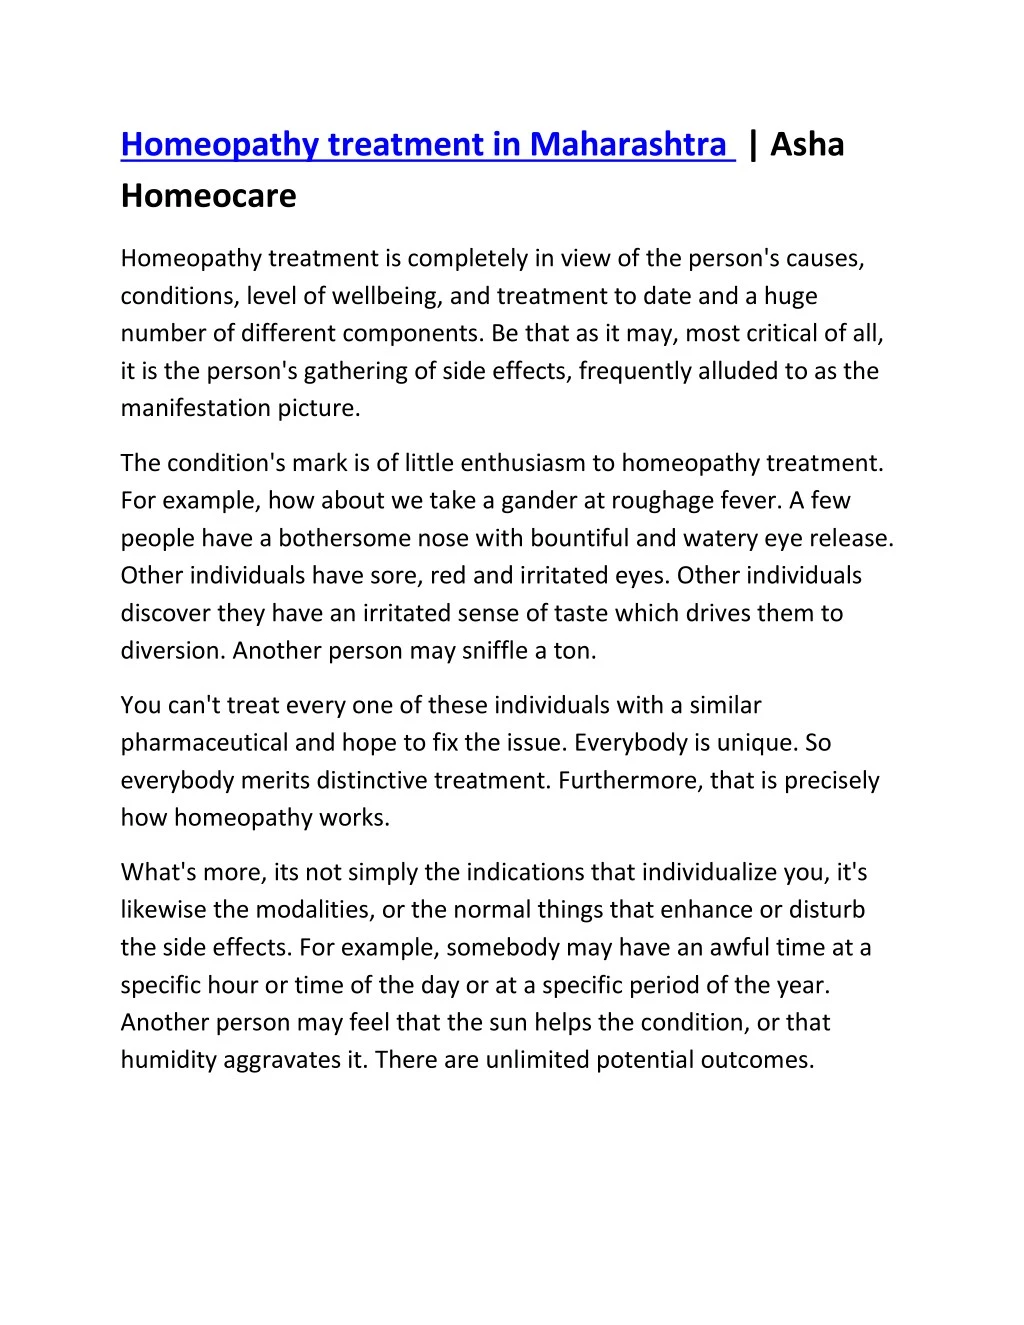 homeopathy treatment in maharashtra asha homeocare